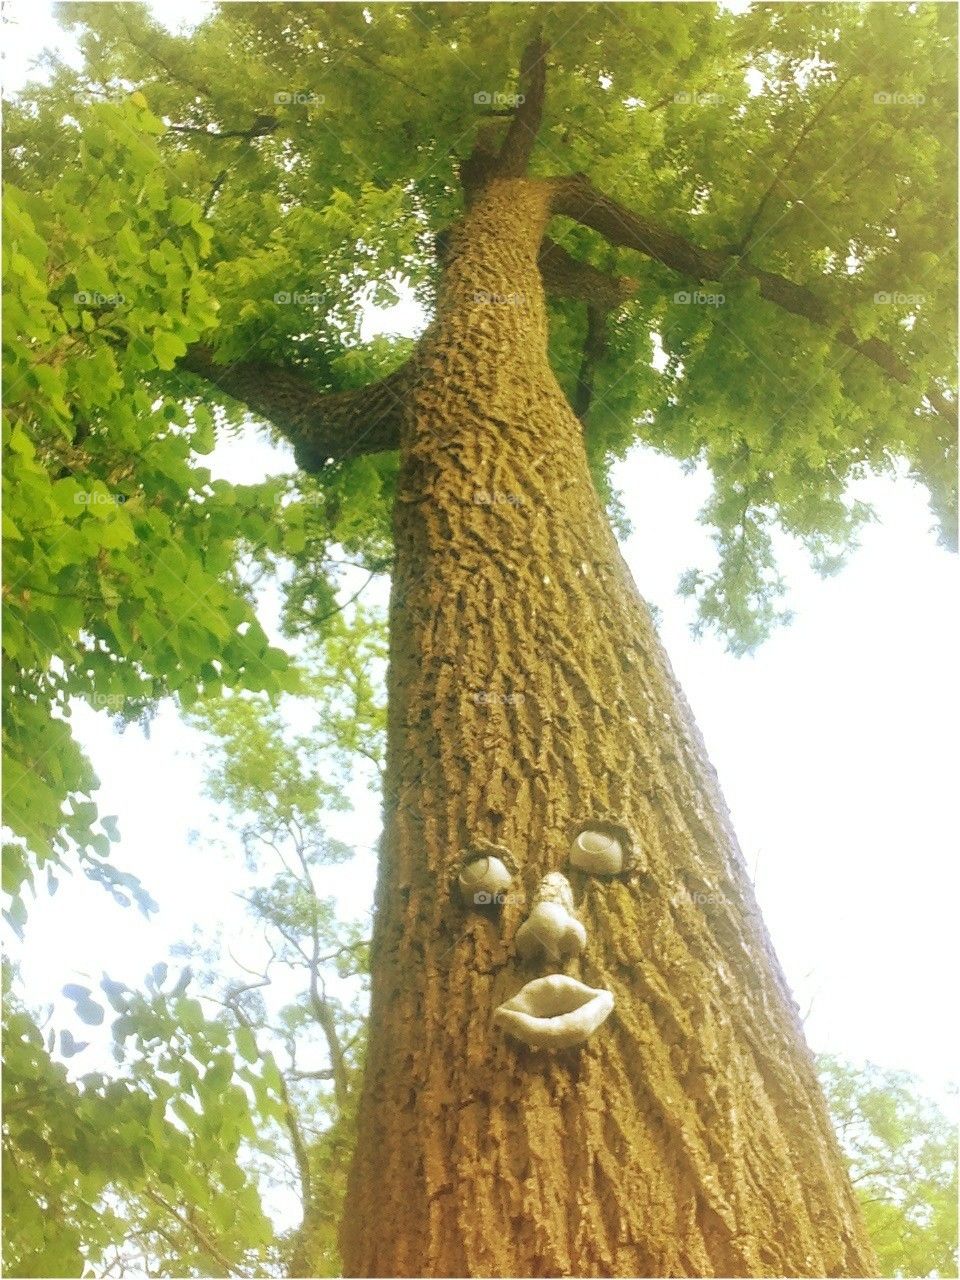 Living life as a tree